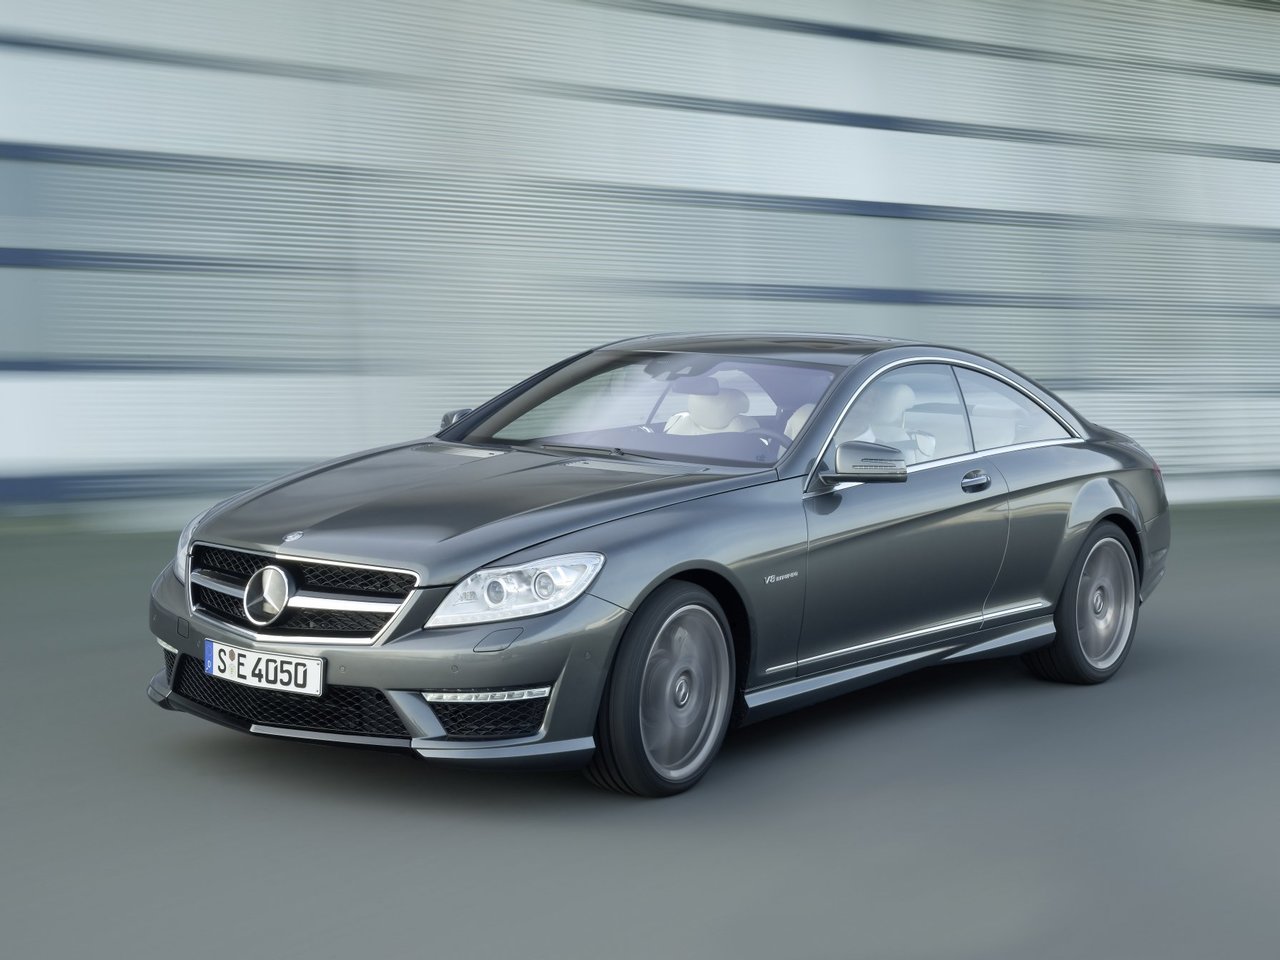 Расход газа двух комплектаций купе-хардтопа Mercedes-Benz CL-klasse AMG. Разница стоимости заправки газом и бензином. Автономный пробег до и после установки ГБО.